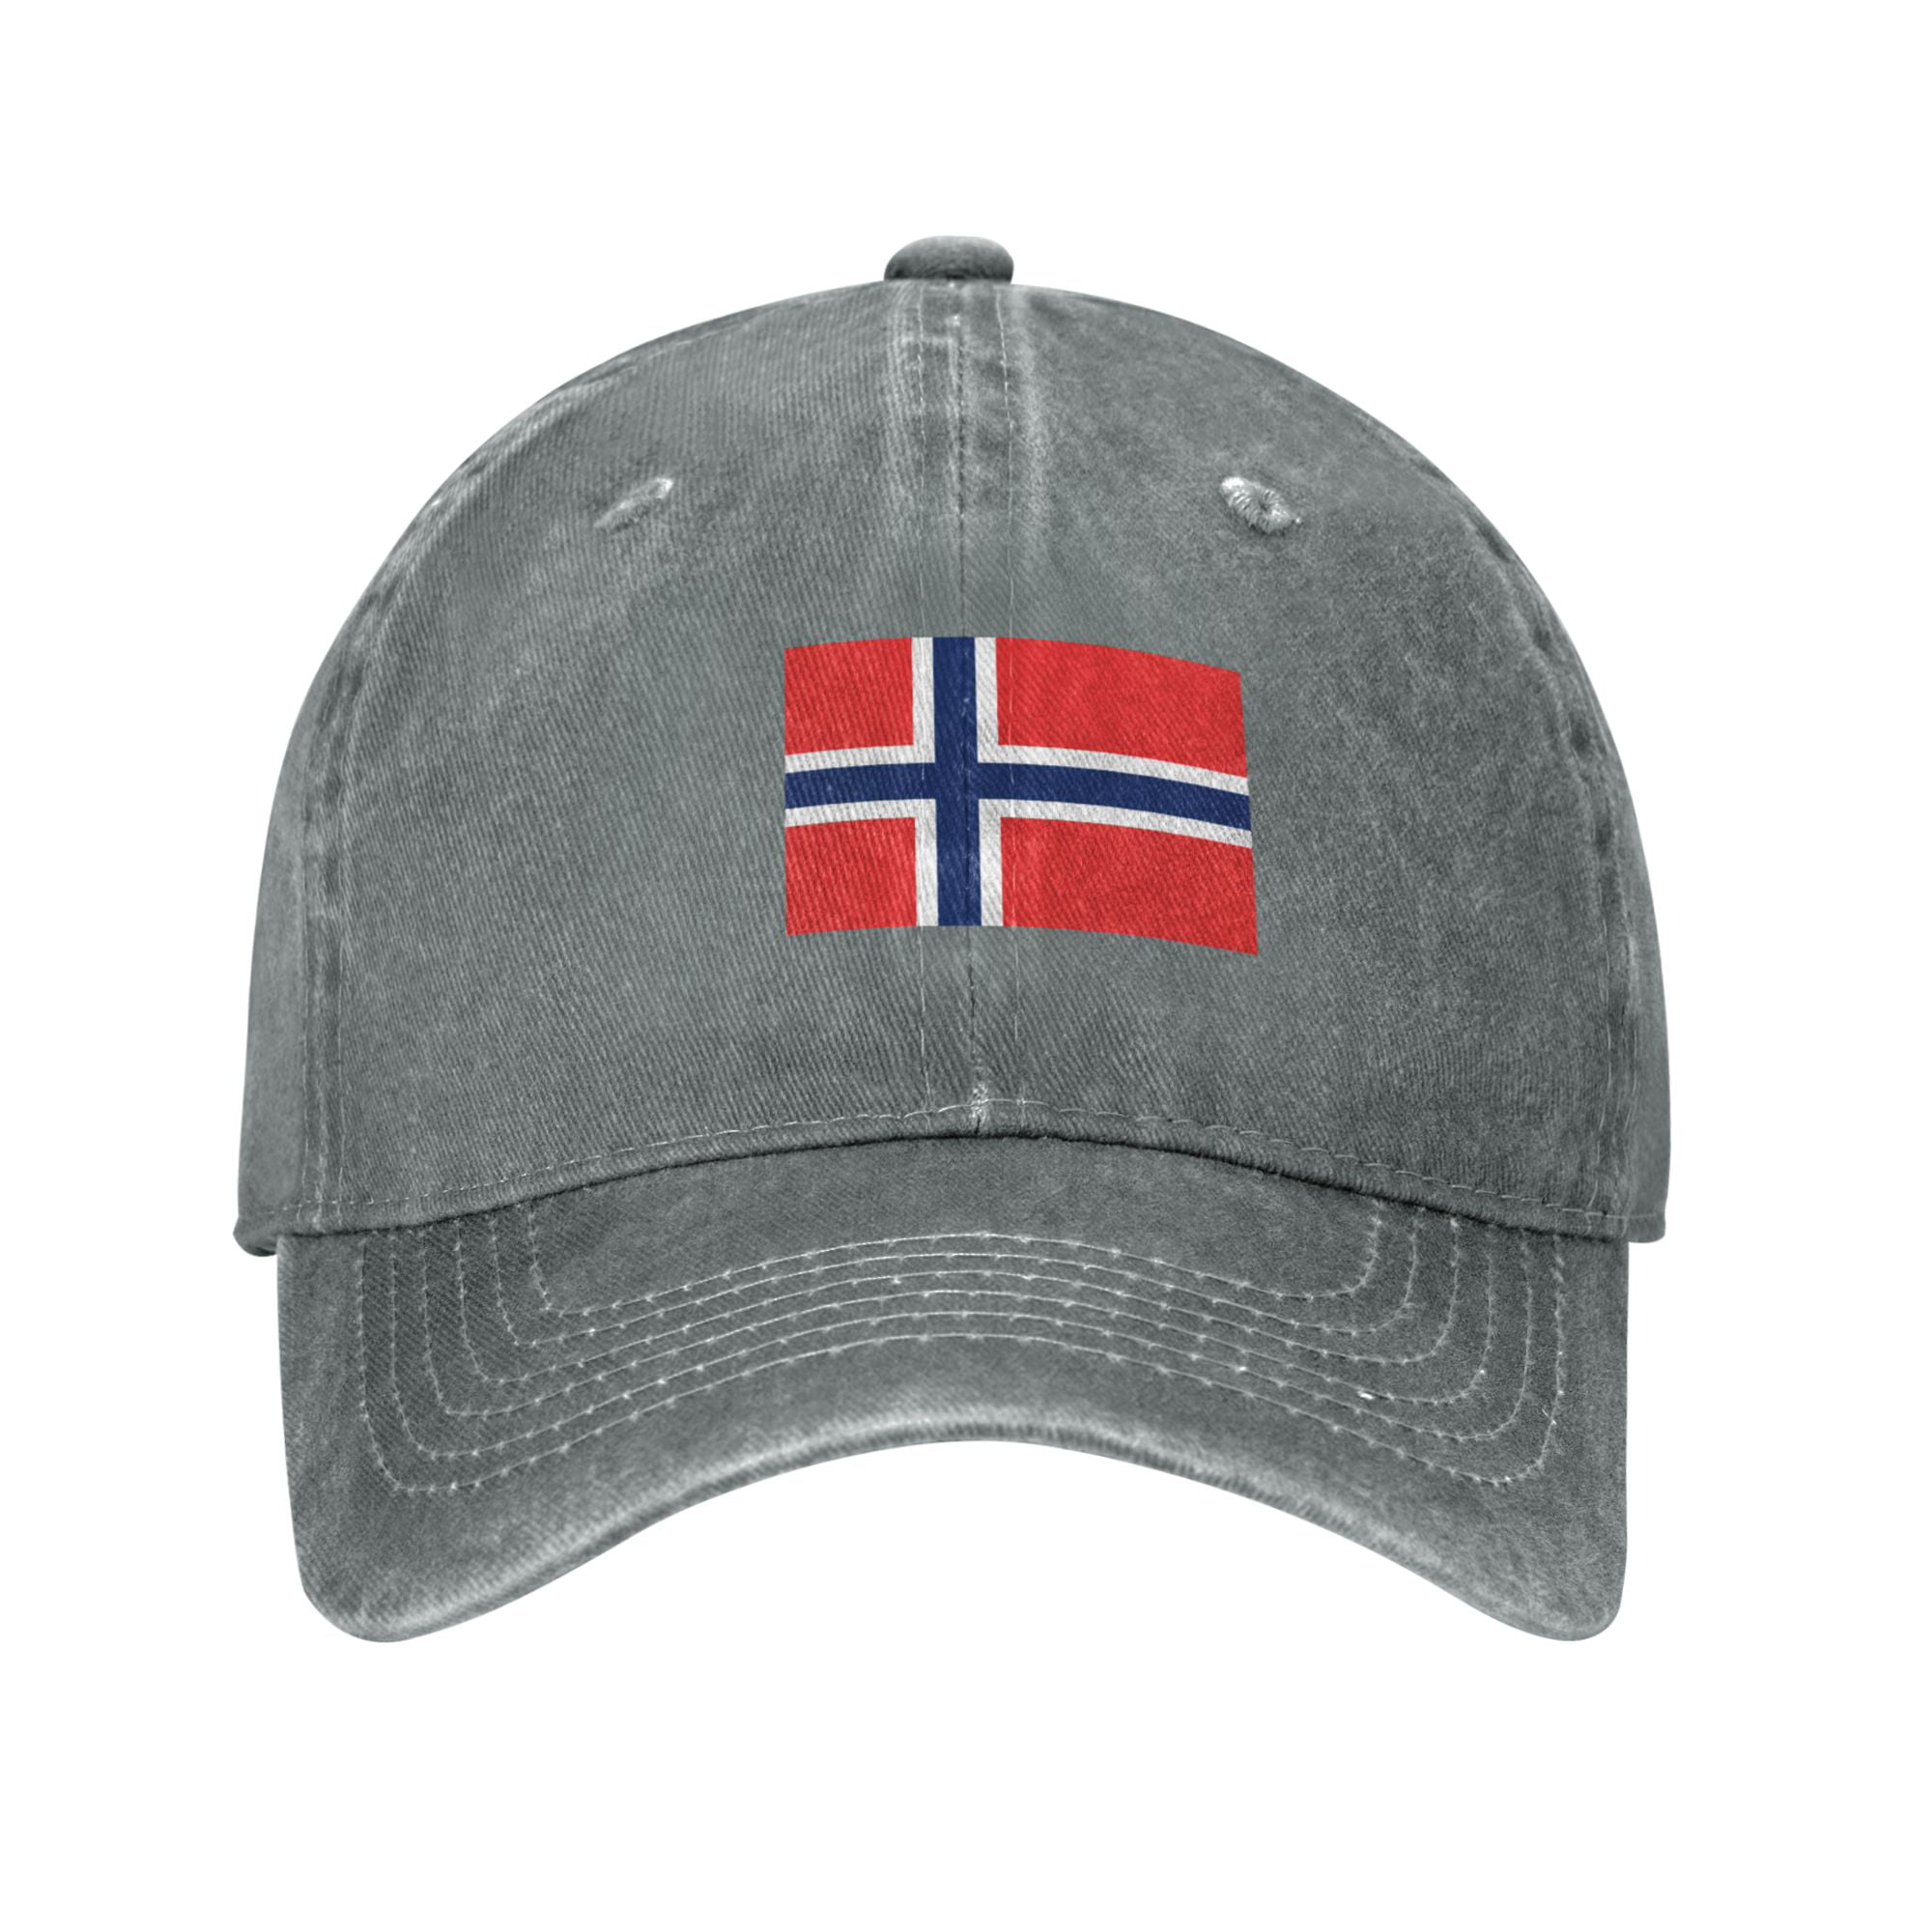 ZICANCN Norway Flag Adjustable Baseball Cap Women , Hats for Men Adult  Washed Cotton Denim Baseball Caps Fashion Gray 